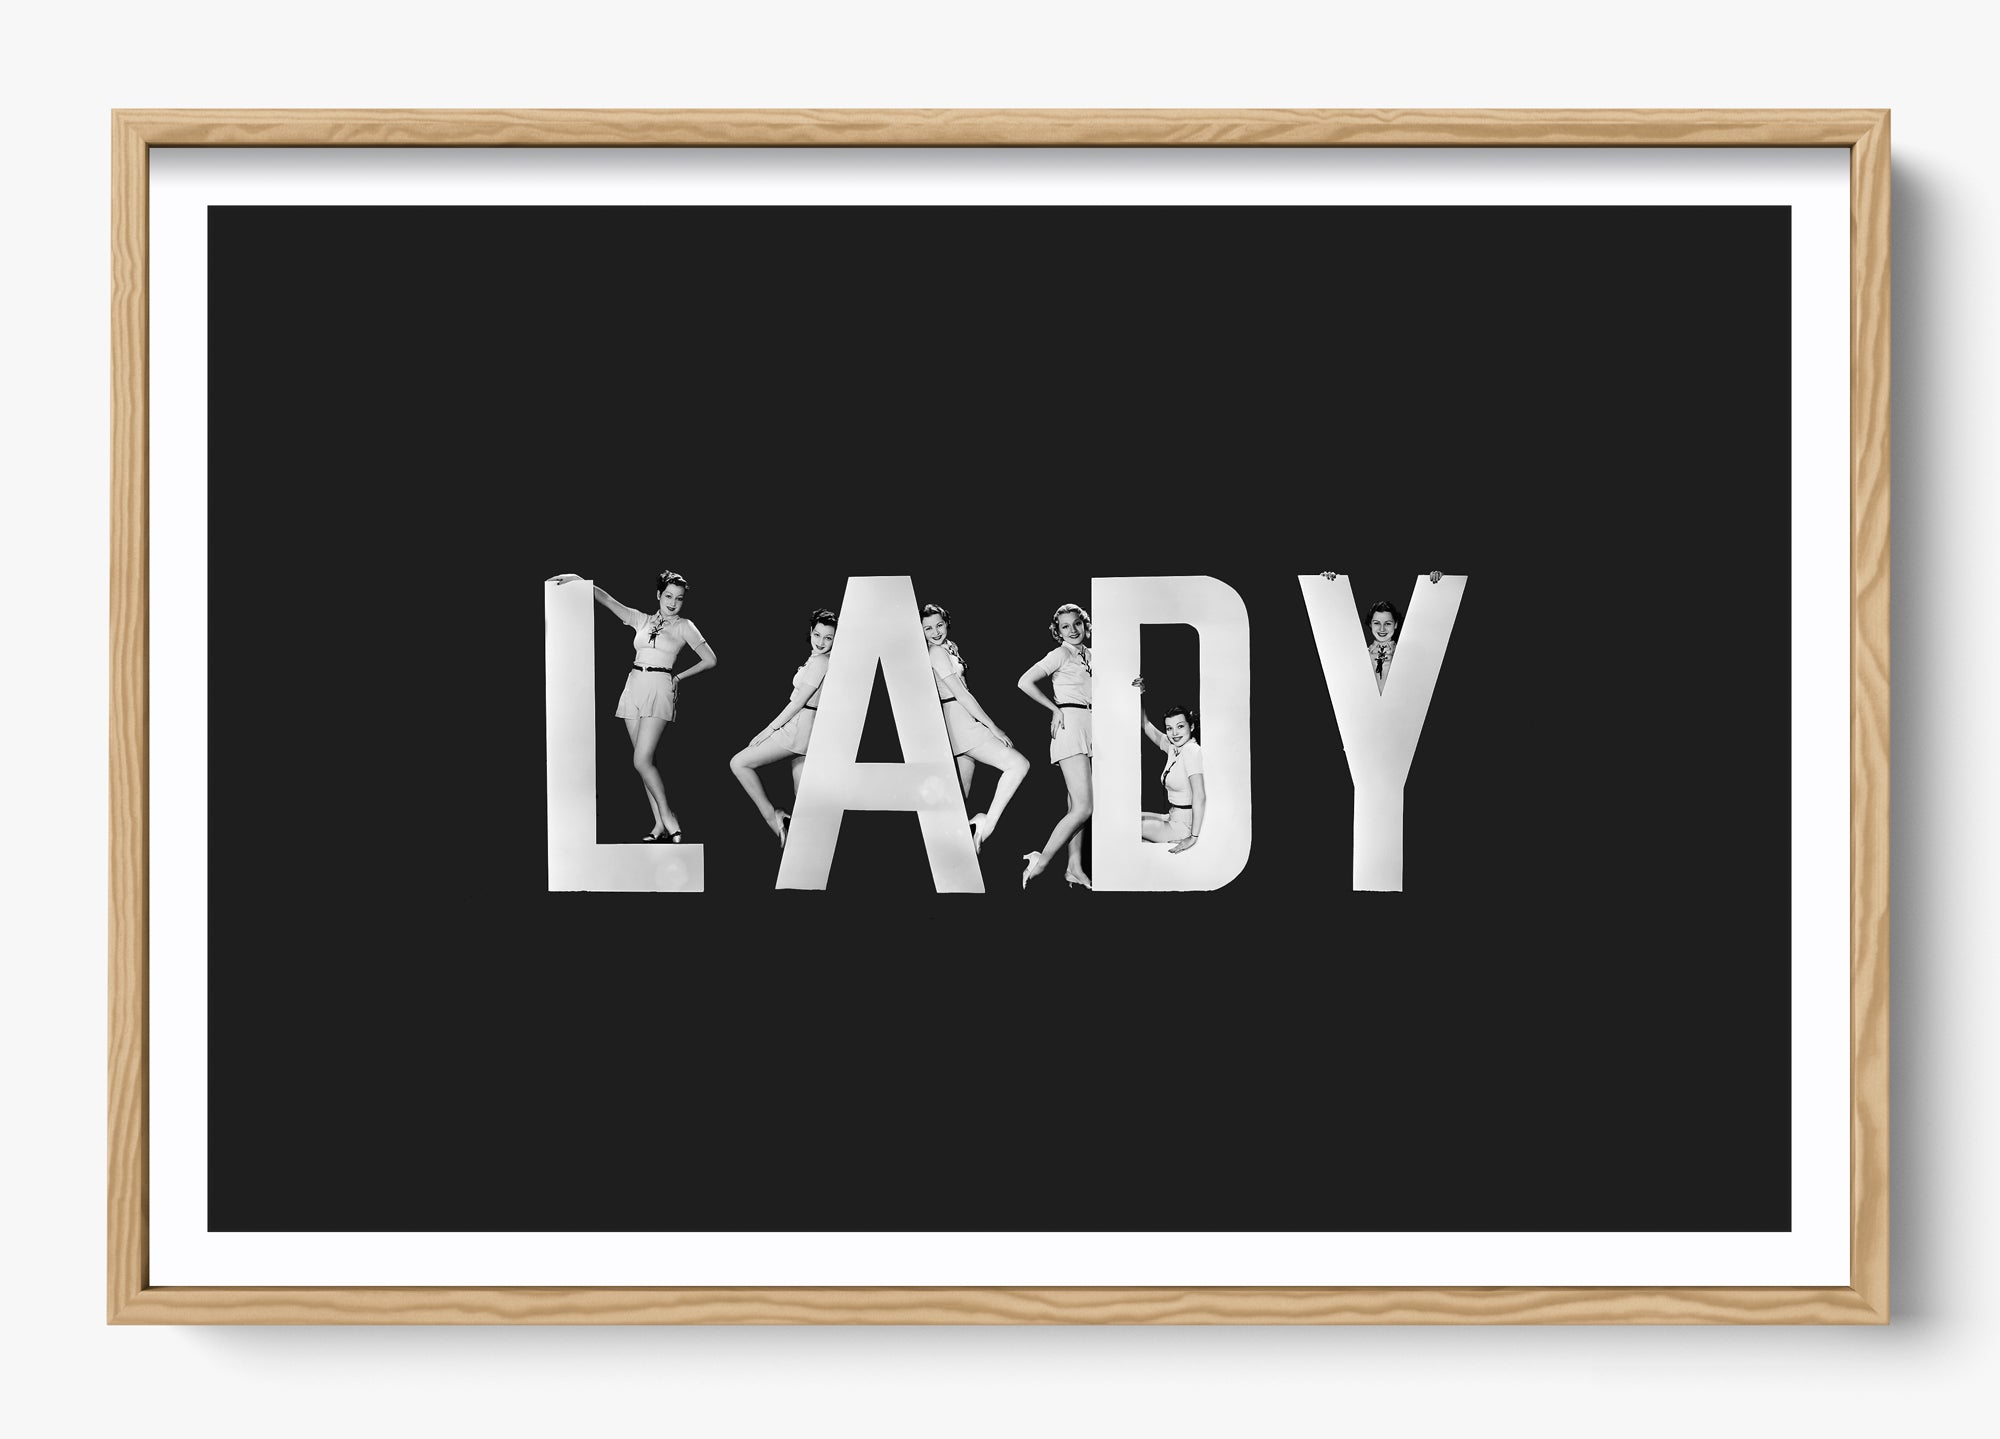 Lady